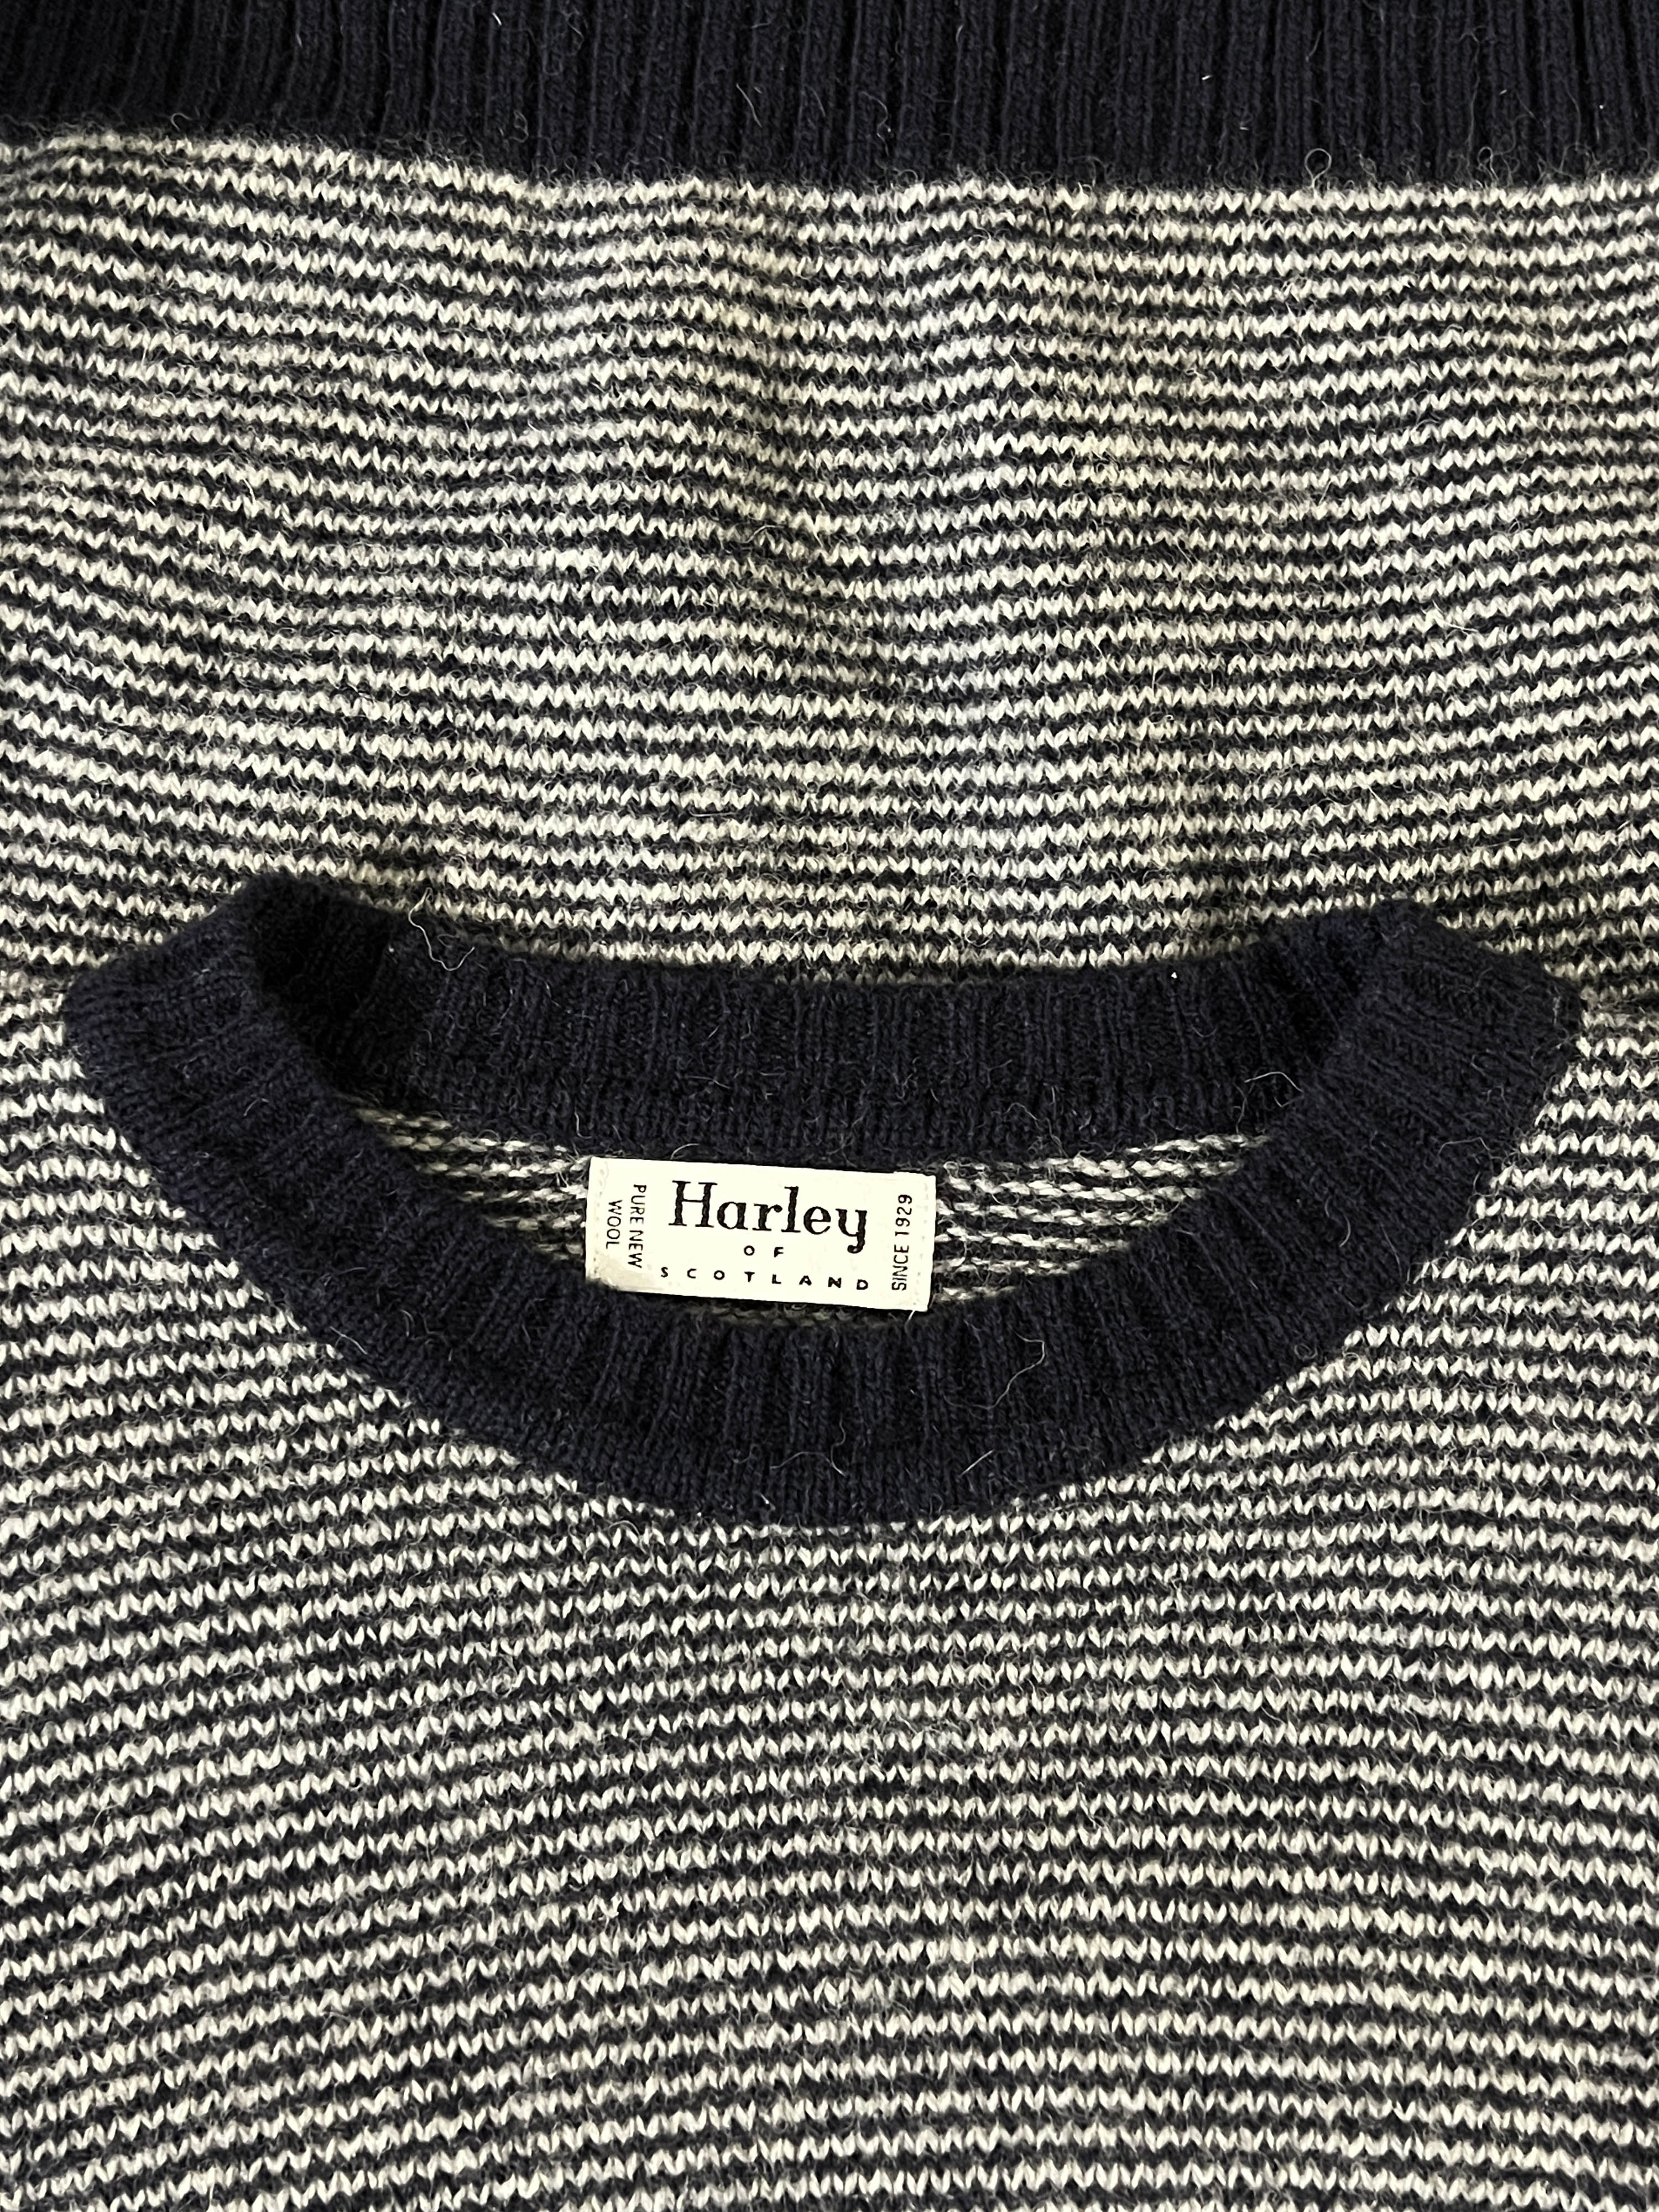 Harley of Scotland stripe knit